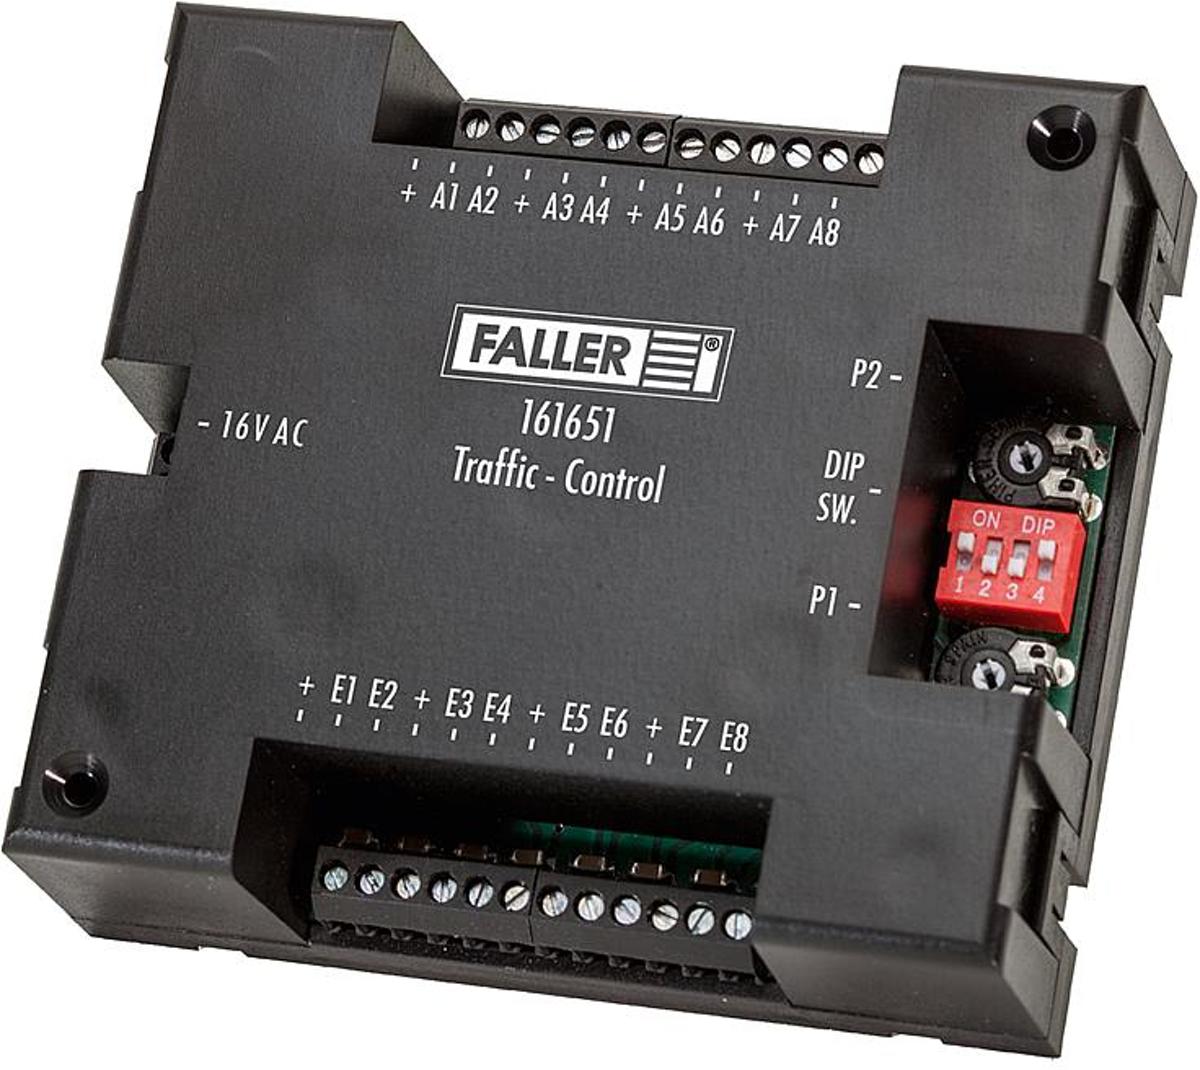 Faller -Traffic-Control (161651)